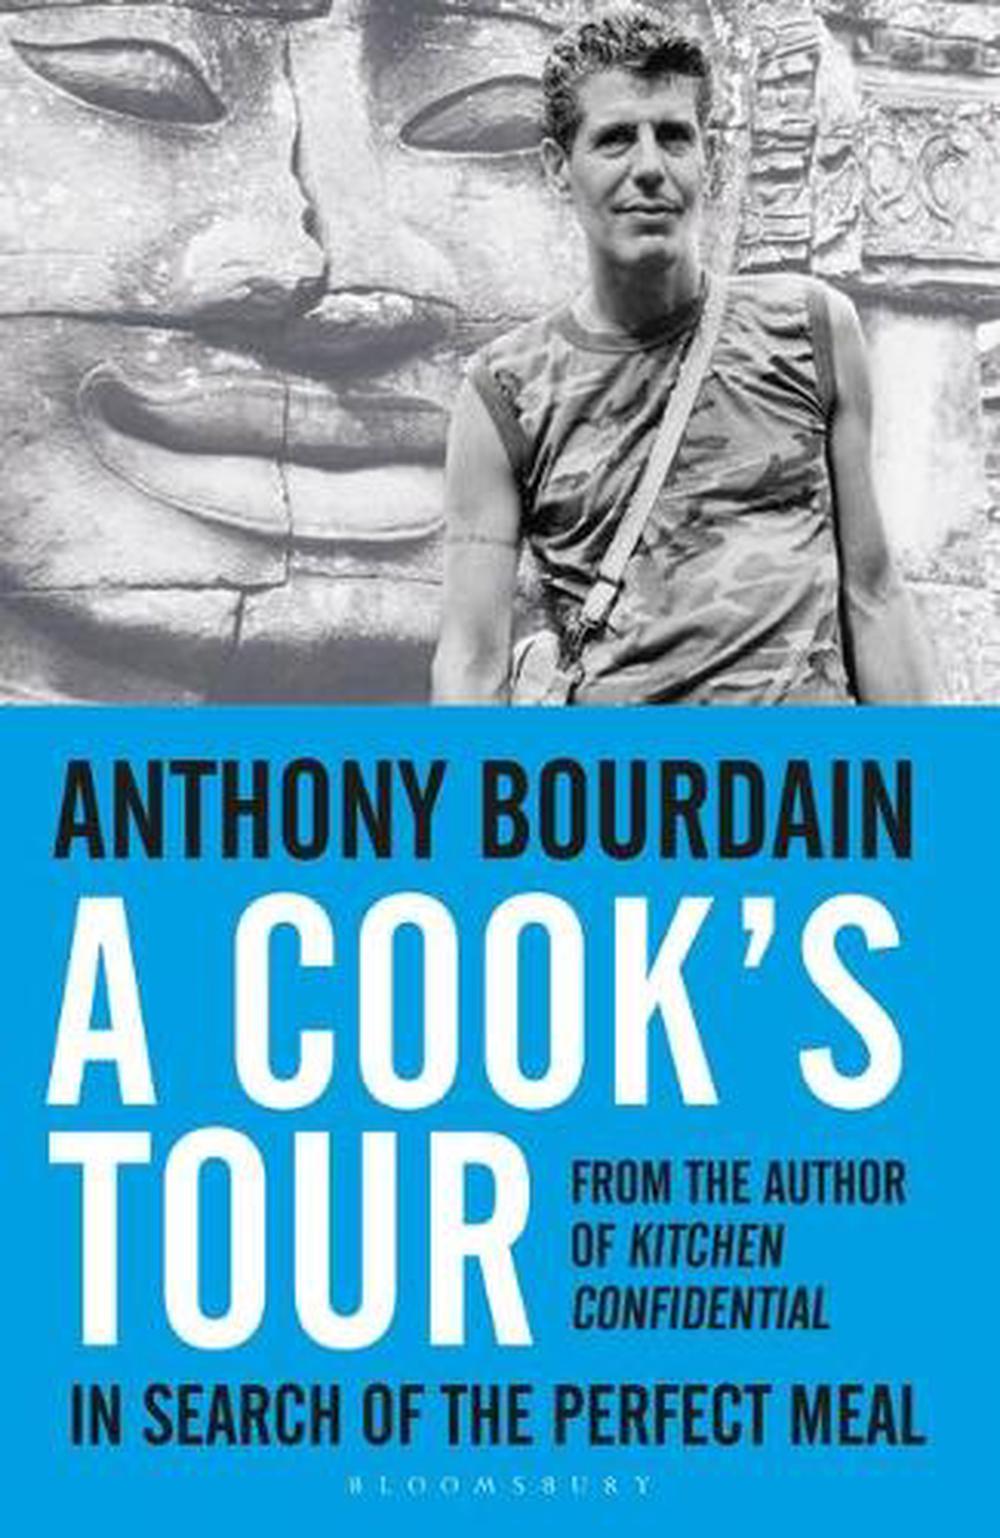 bourdain a cook's tour book